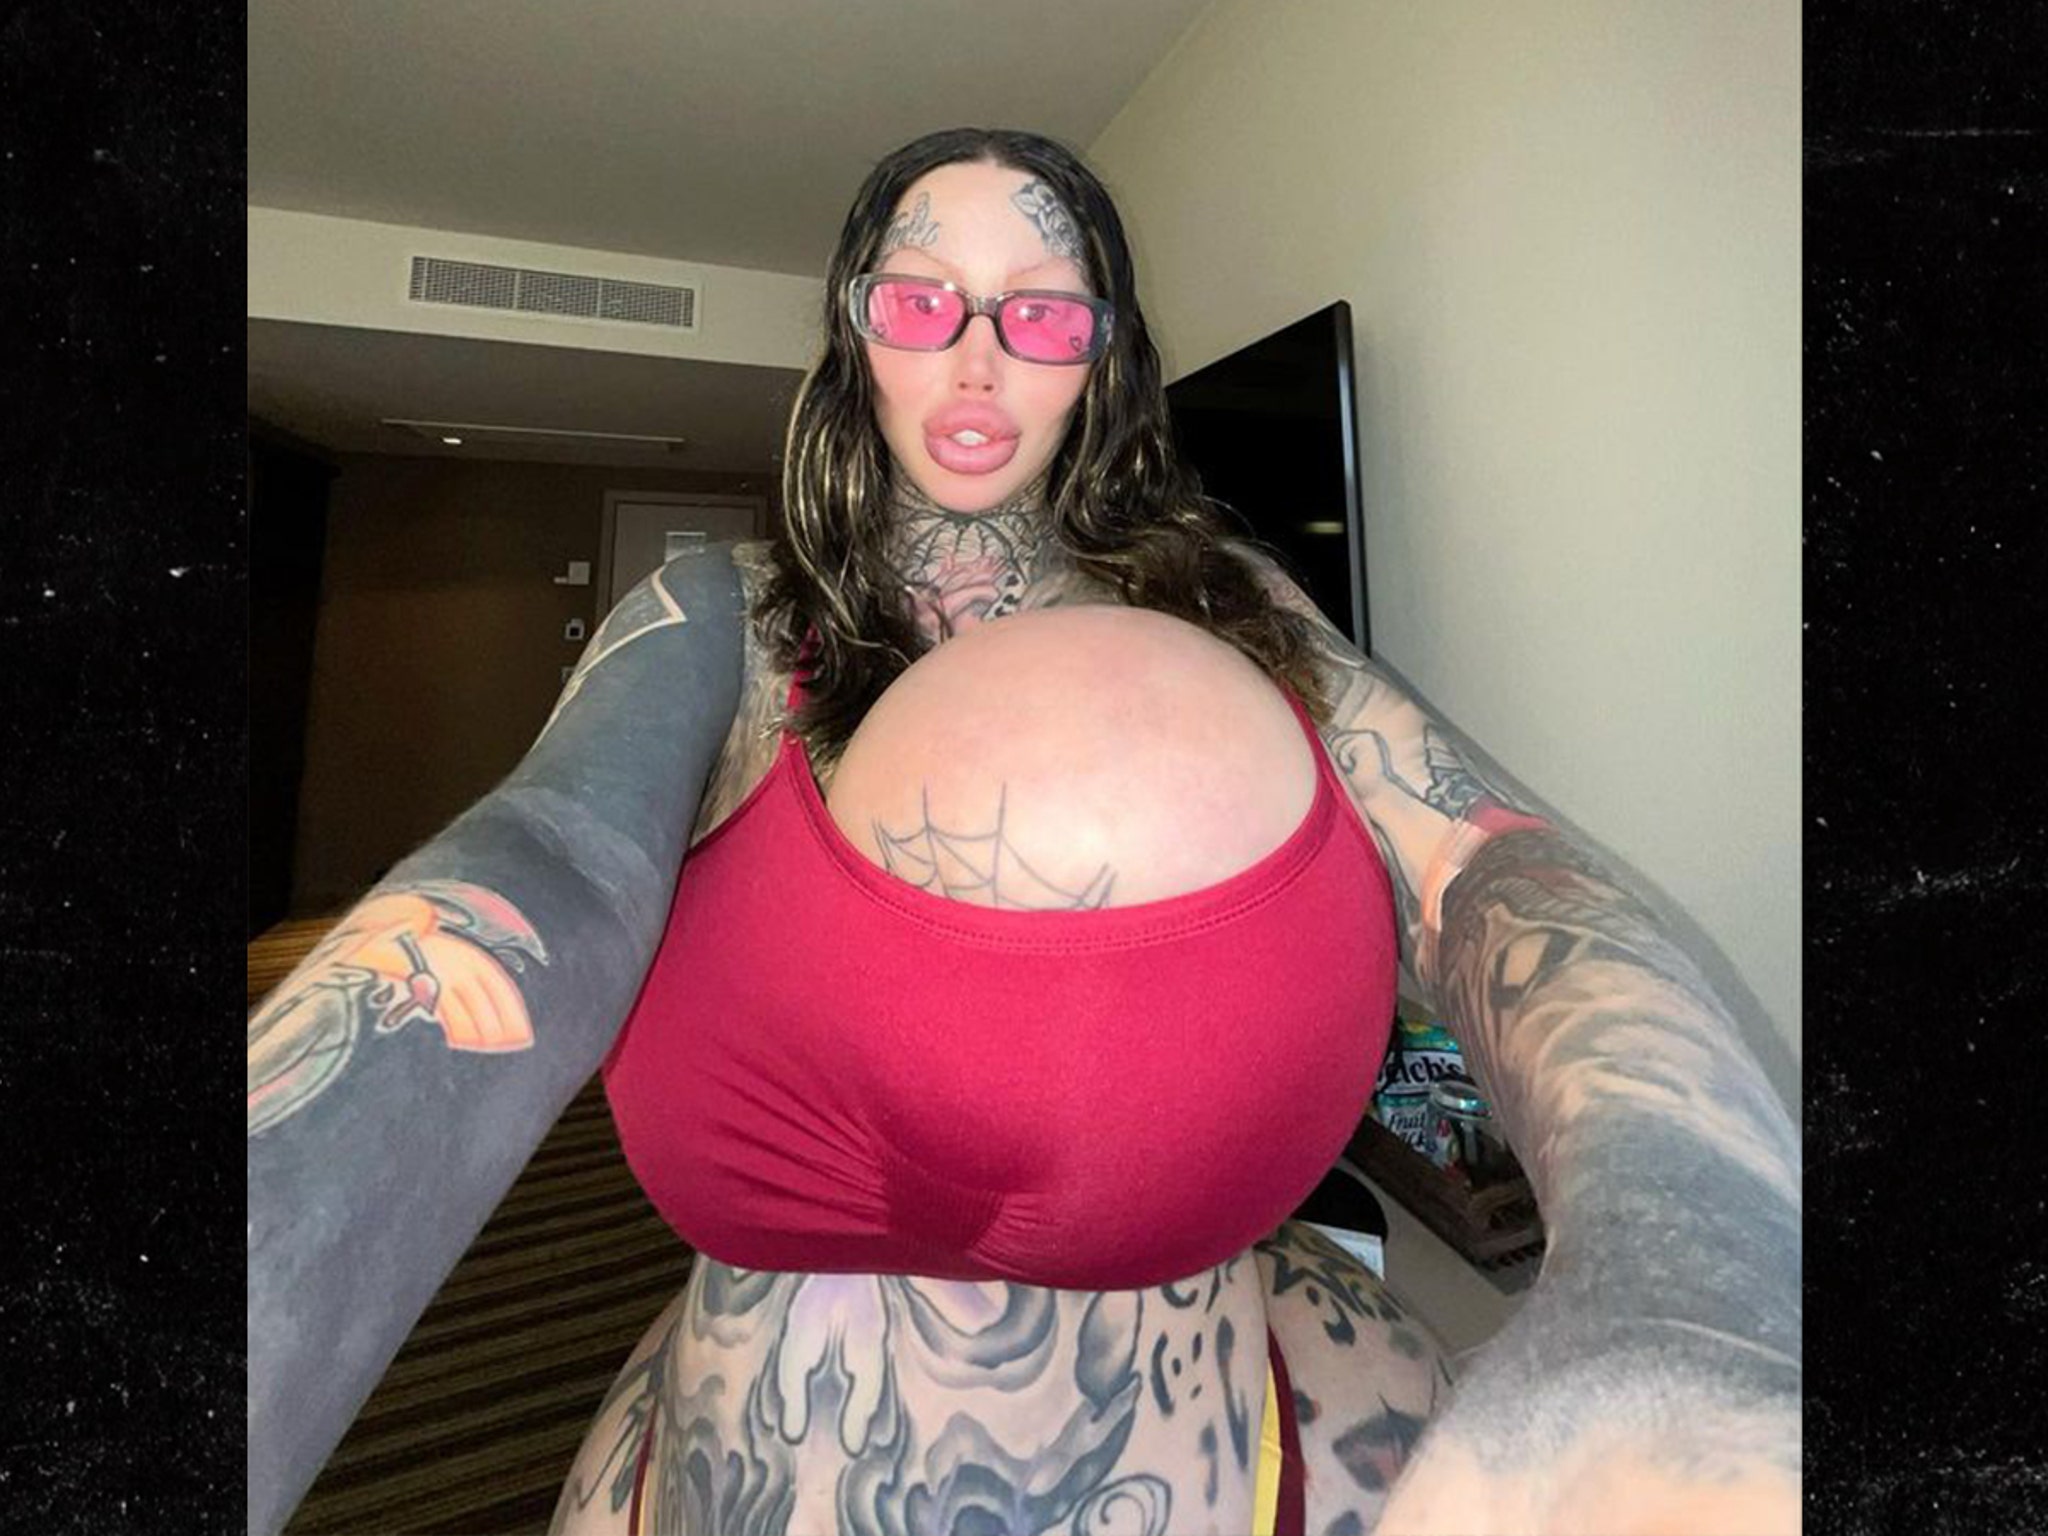 annamaria tuzzolino share biggest boobs on earth photos